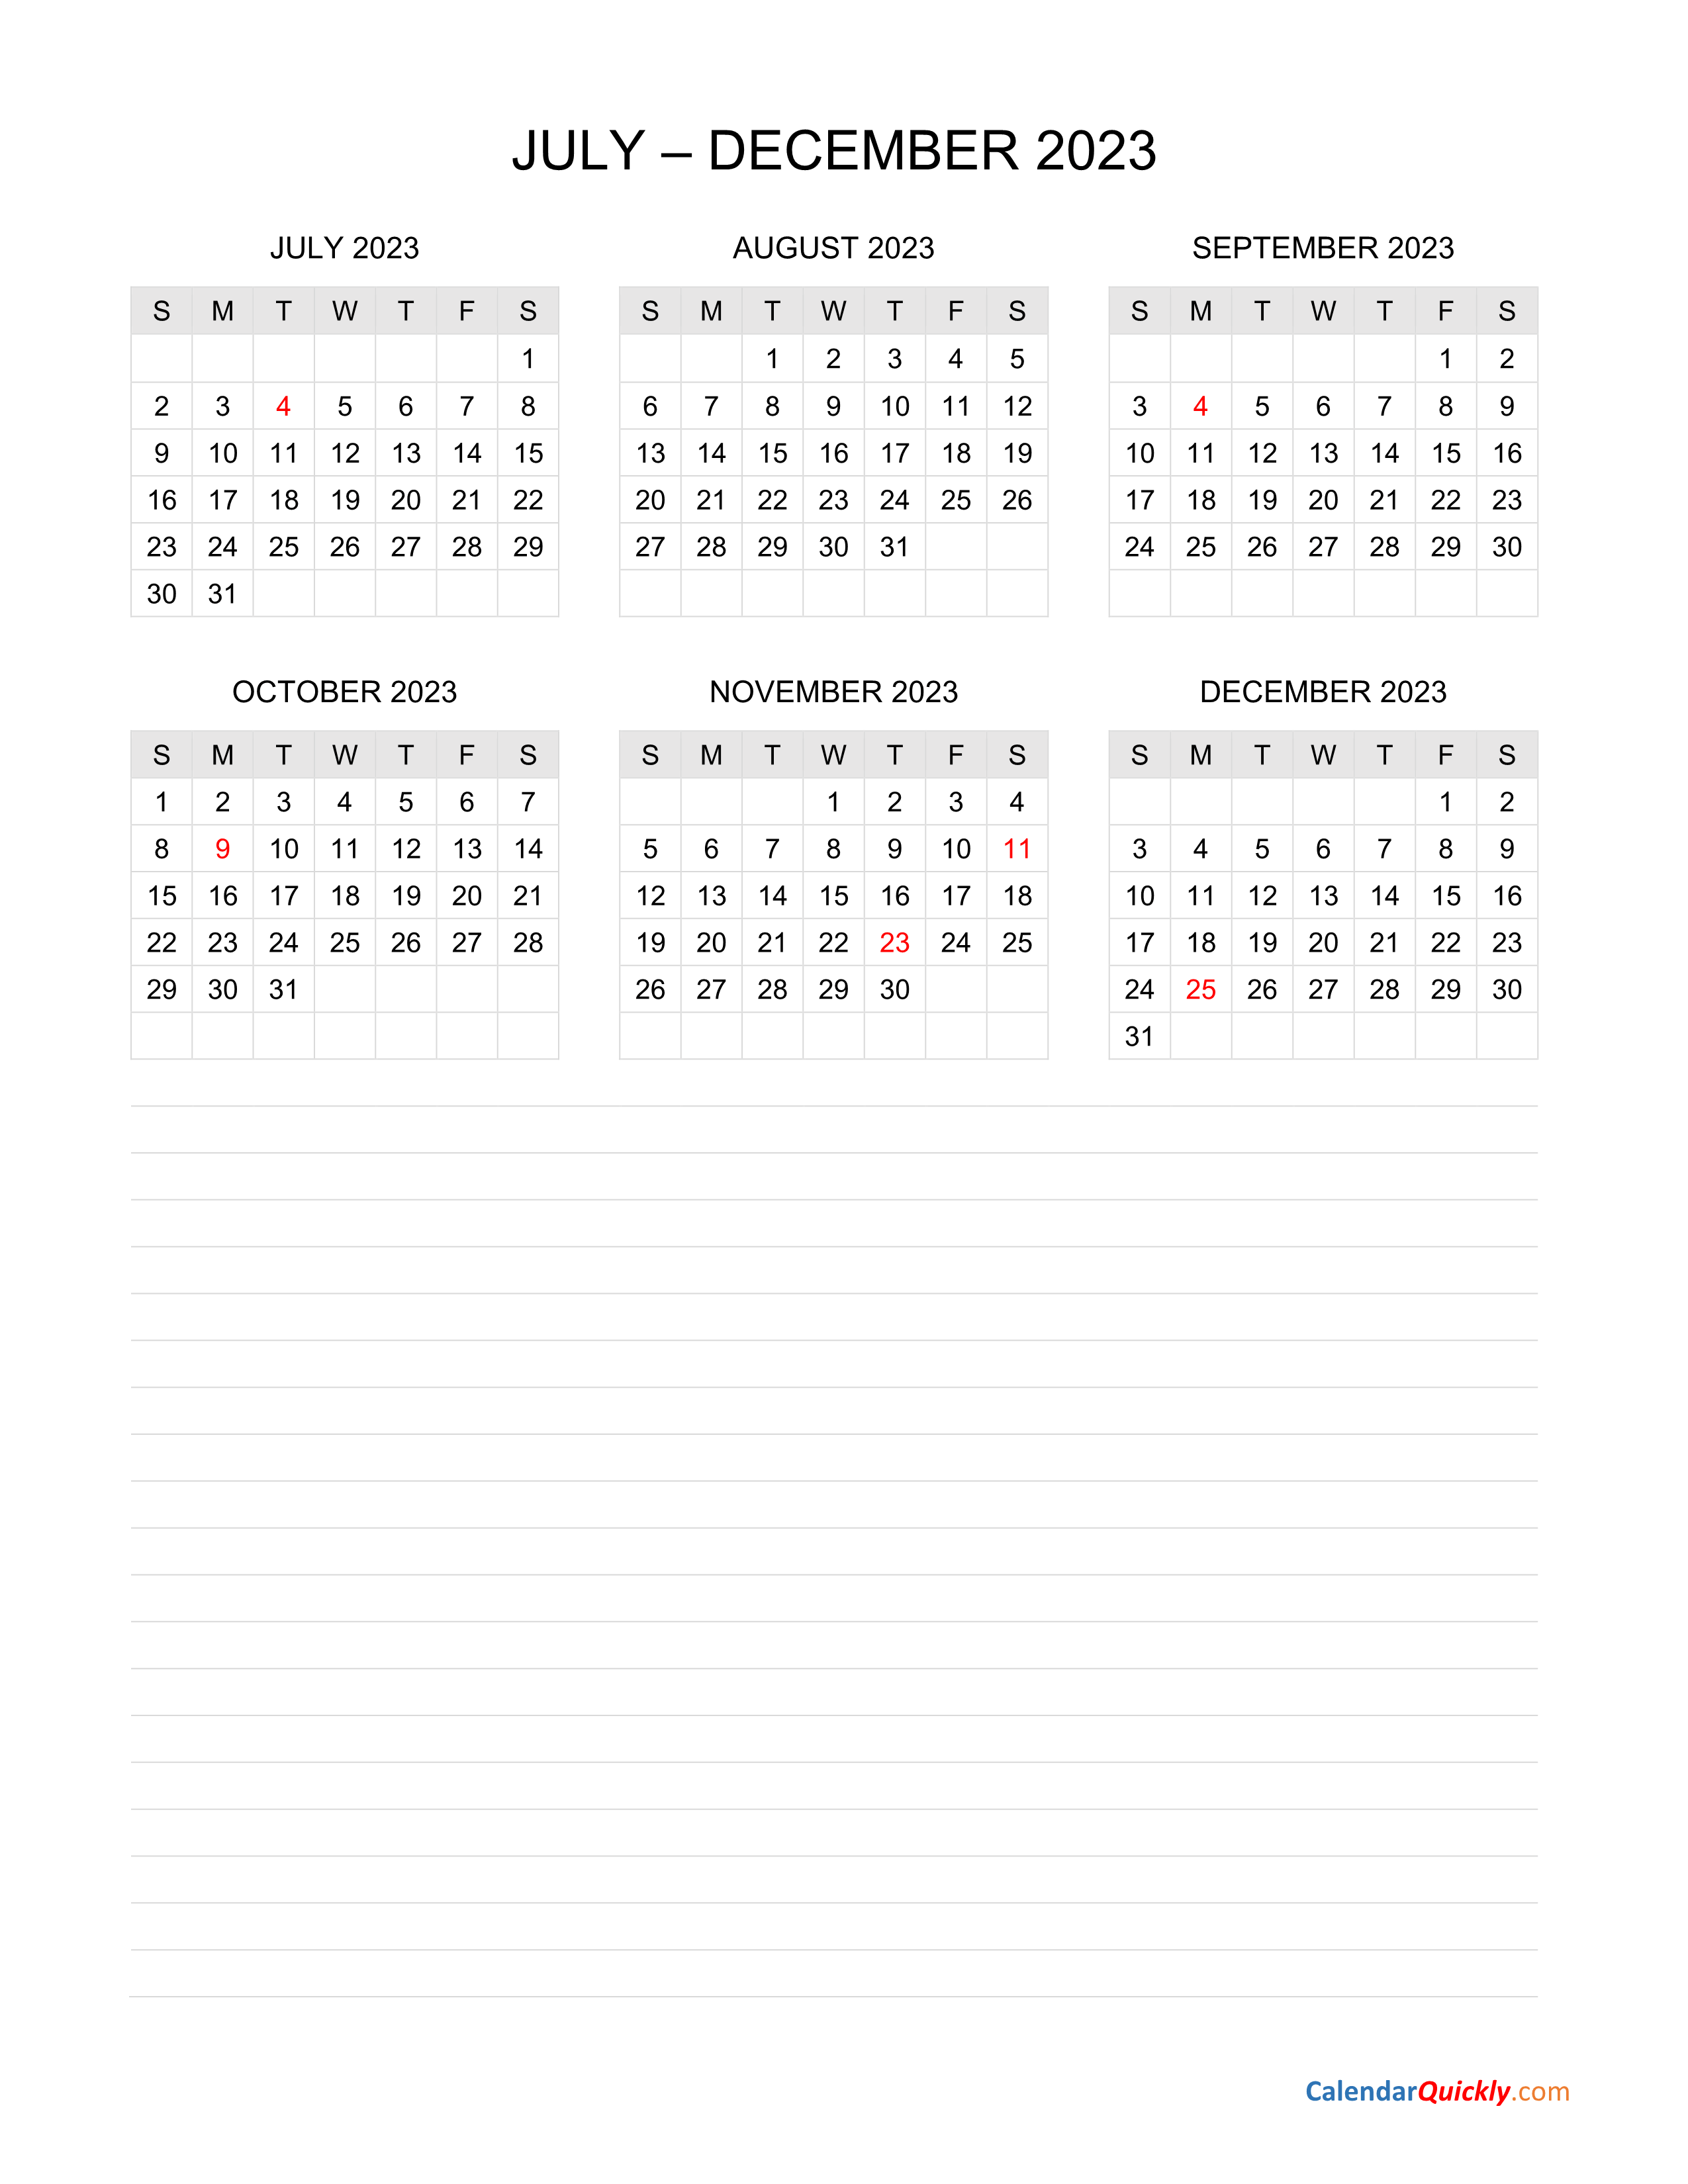 monthly-calendar-2023-printable-calendar-quickly-izeak